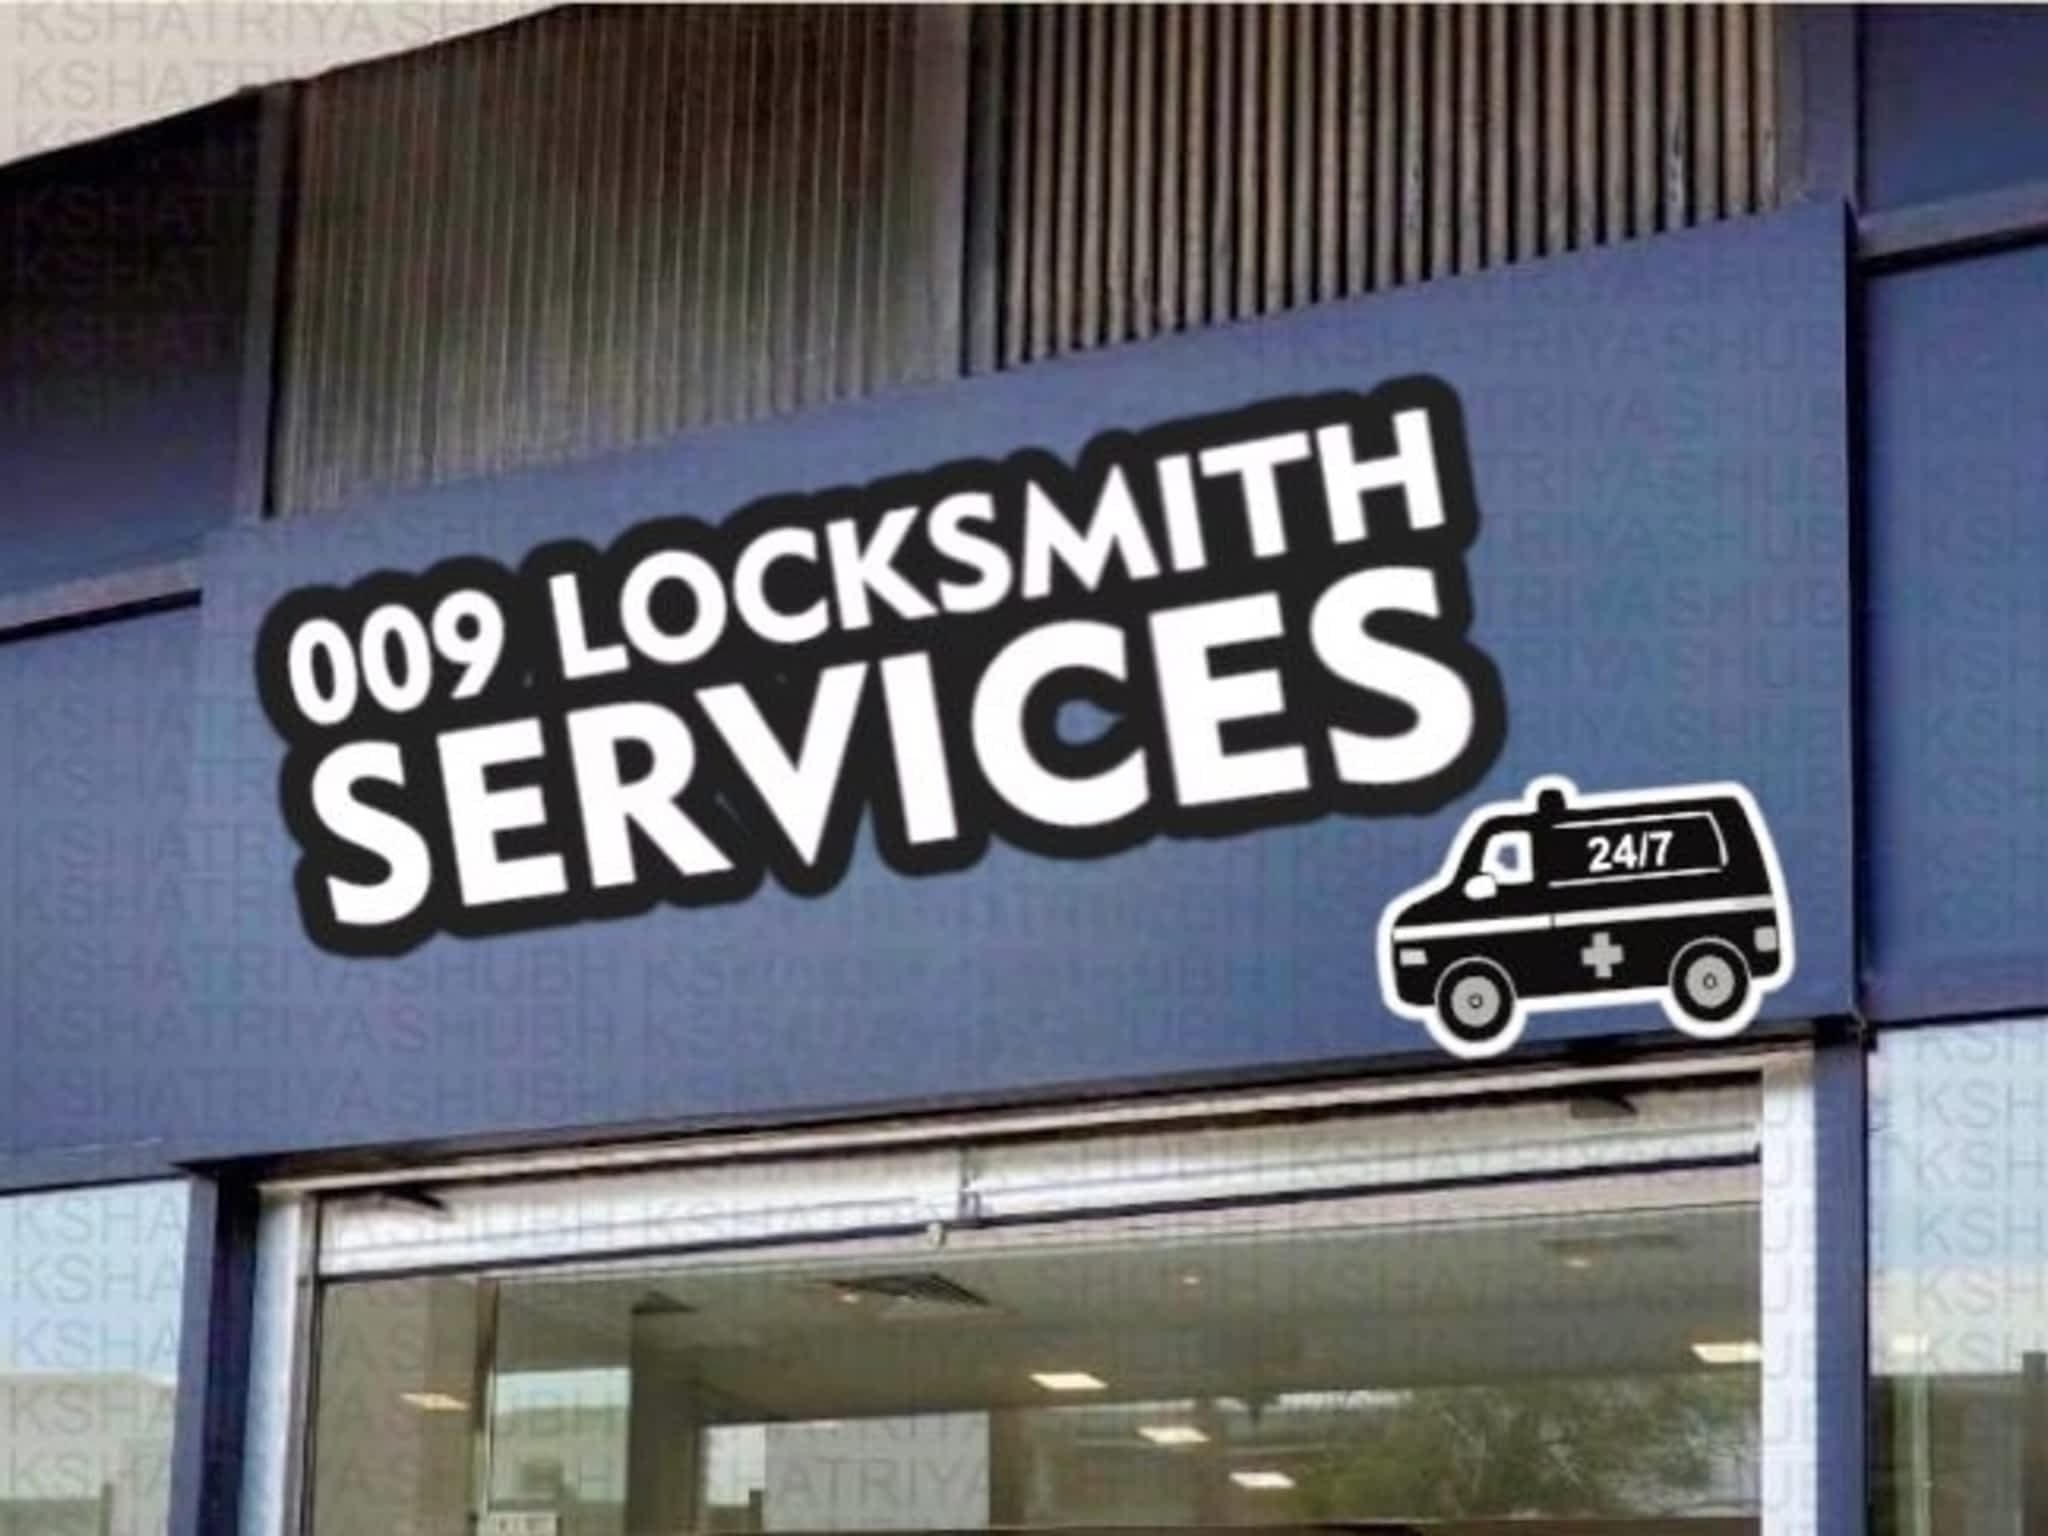 photo 009 Locksmith Services